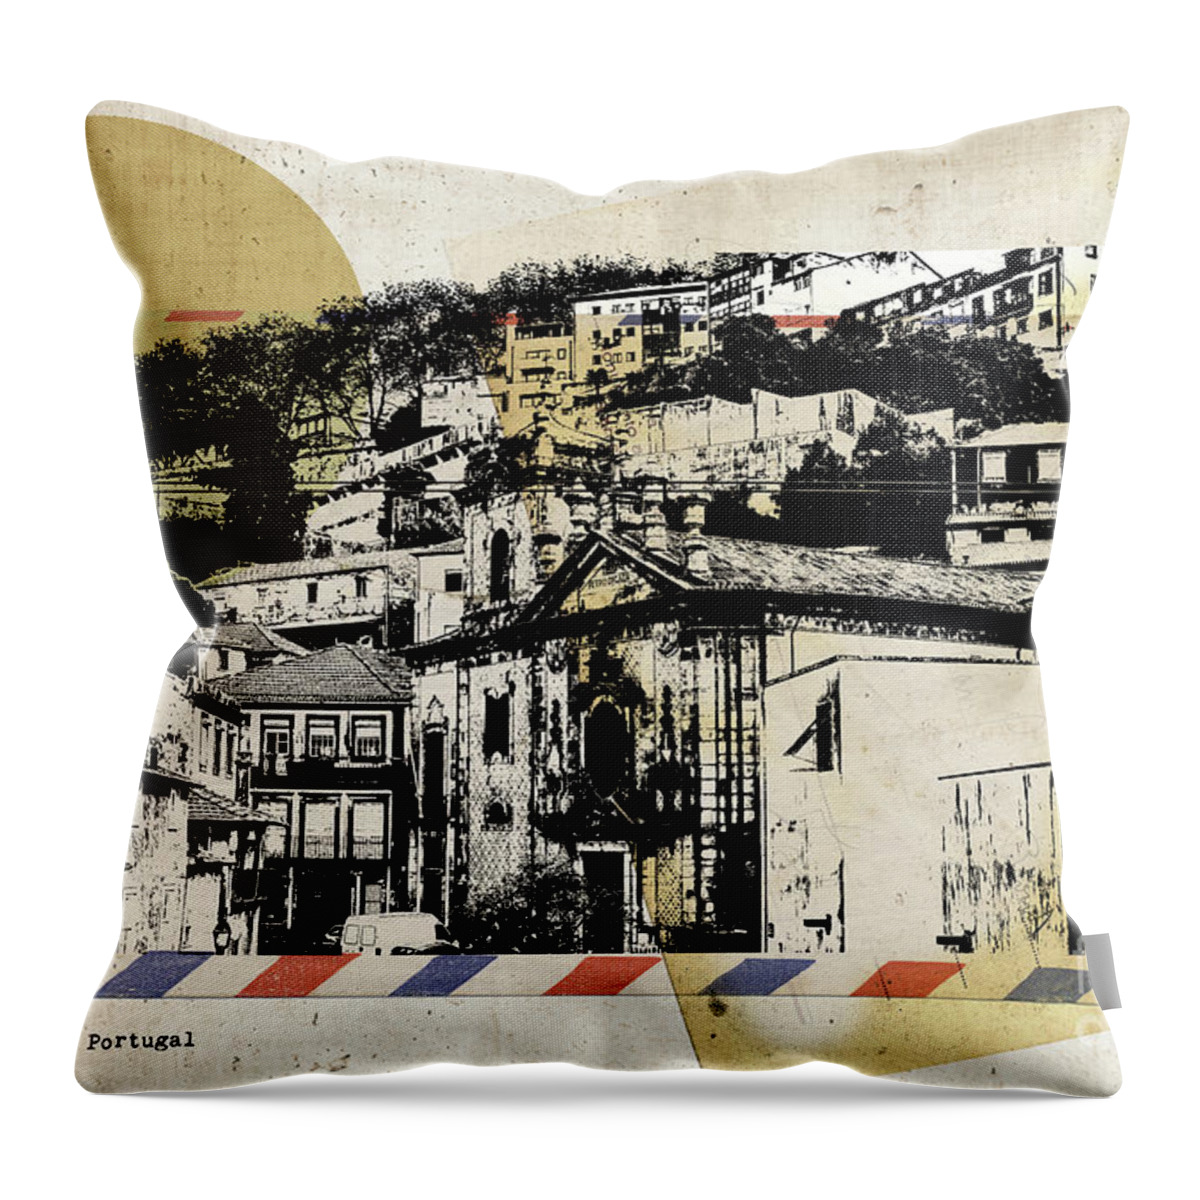 Porto Throw Pillow featuring the digital art stylish retro postcard of Porto #3 by Ariadna De Raadt